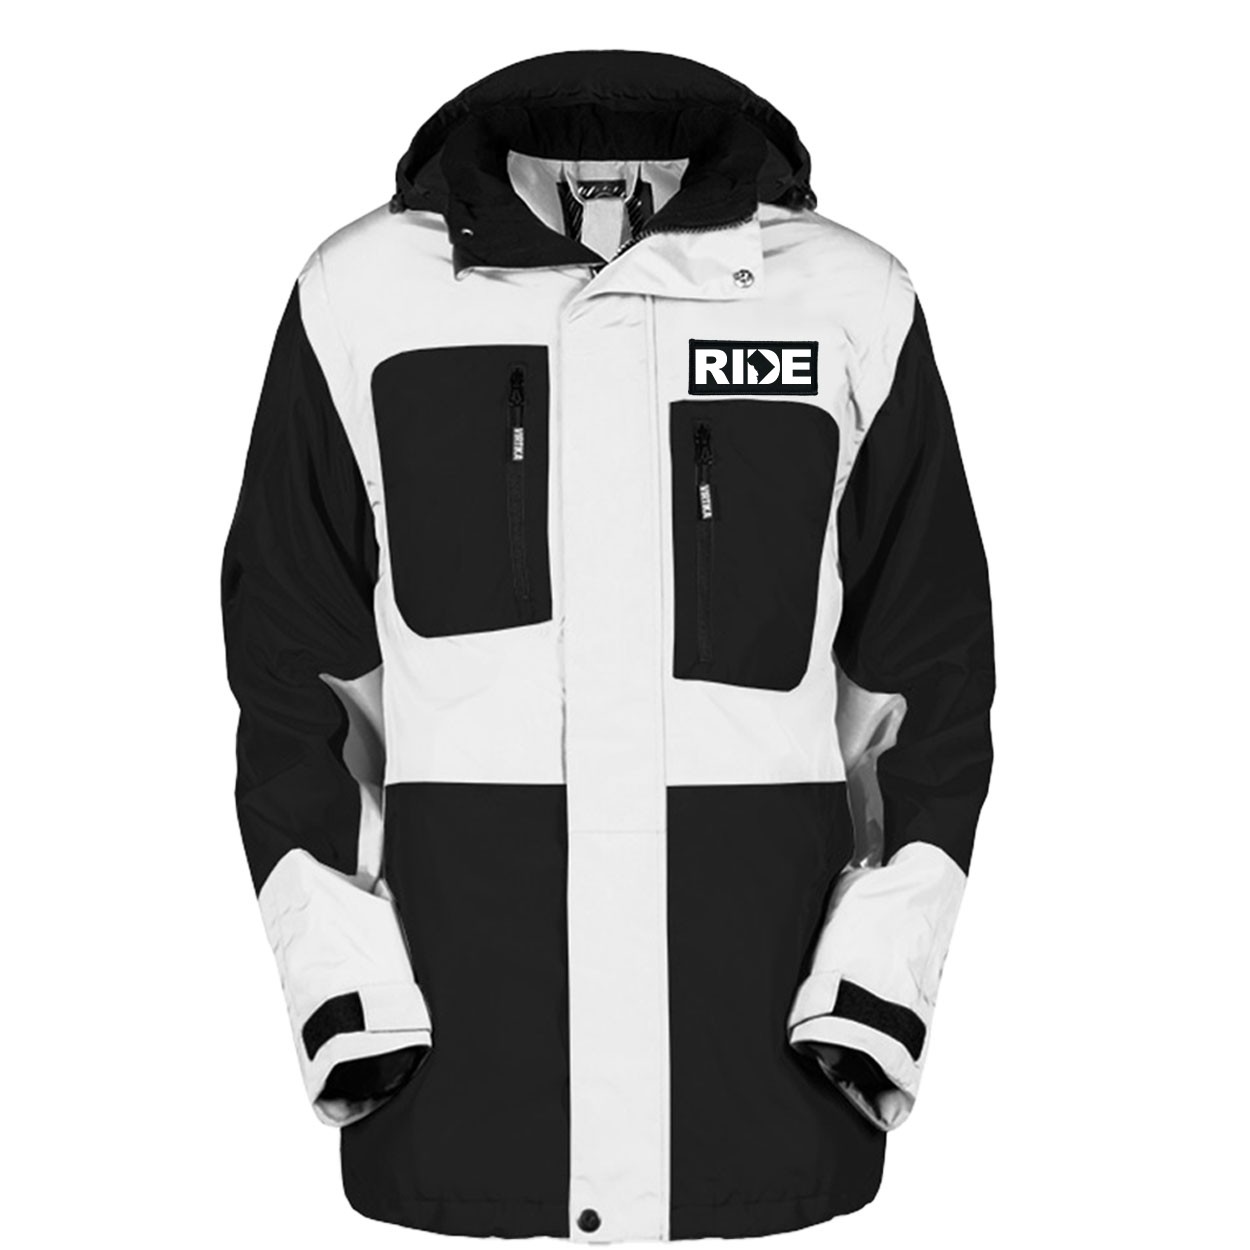 Ride District of Columbia Pro Waterproof Breathable Winter Virtika Jacket Black/White (White Logo)